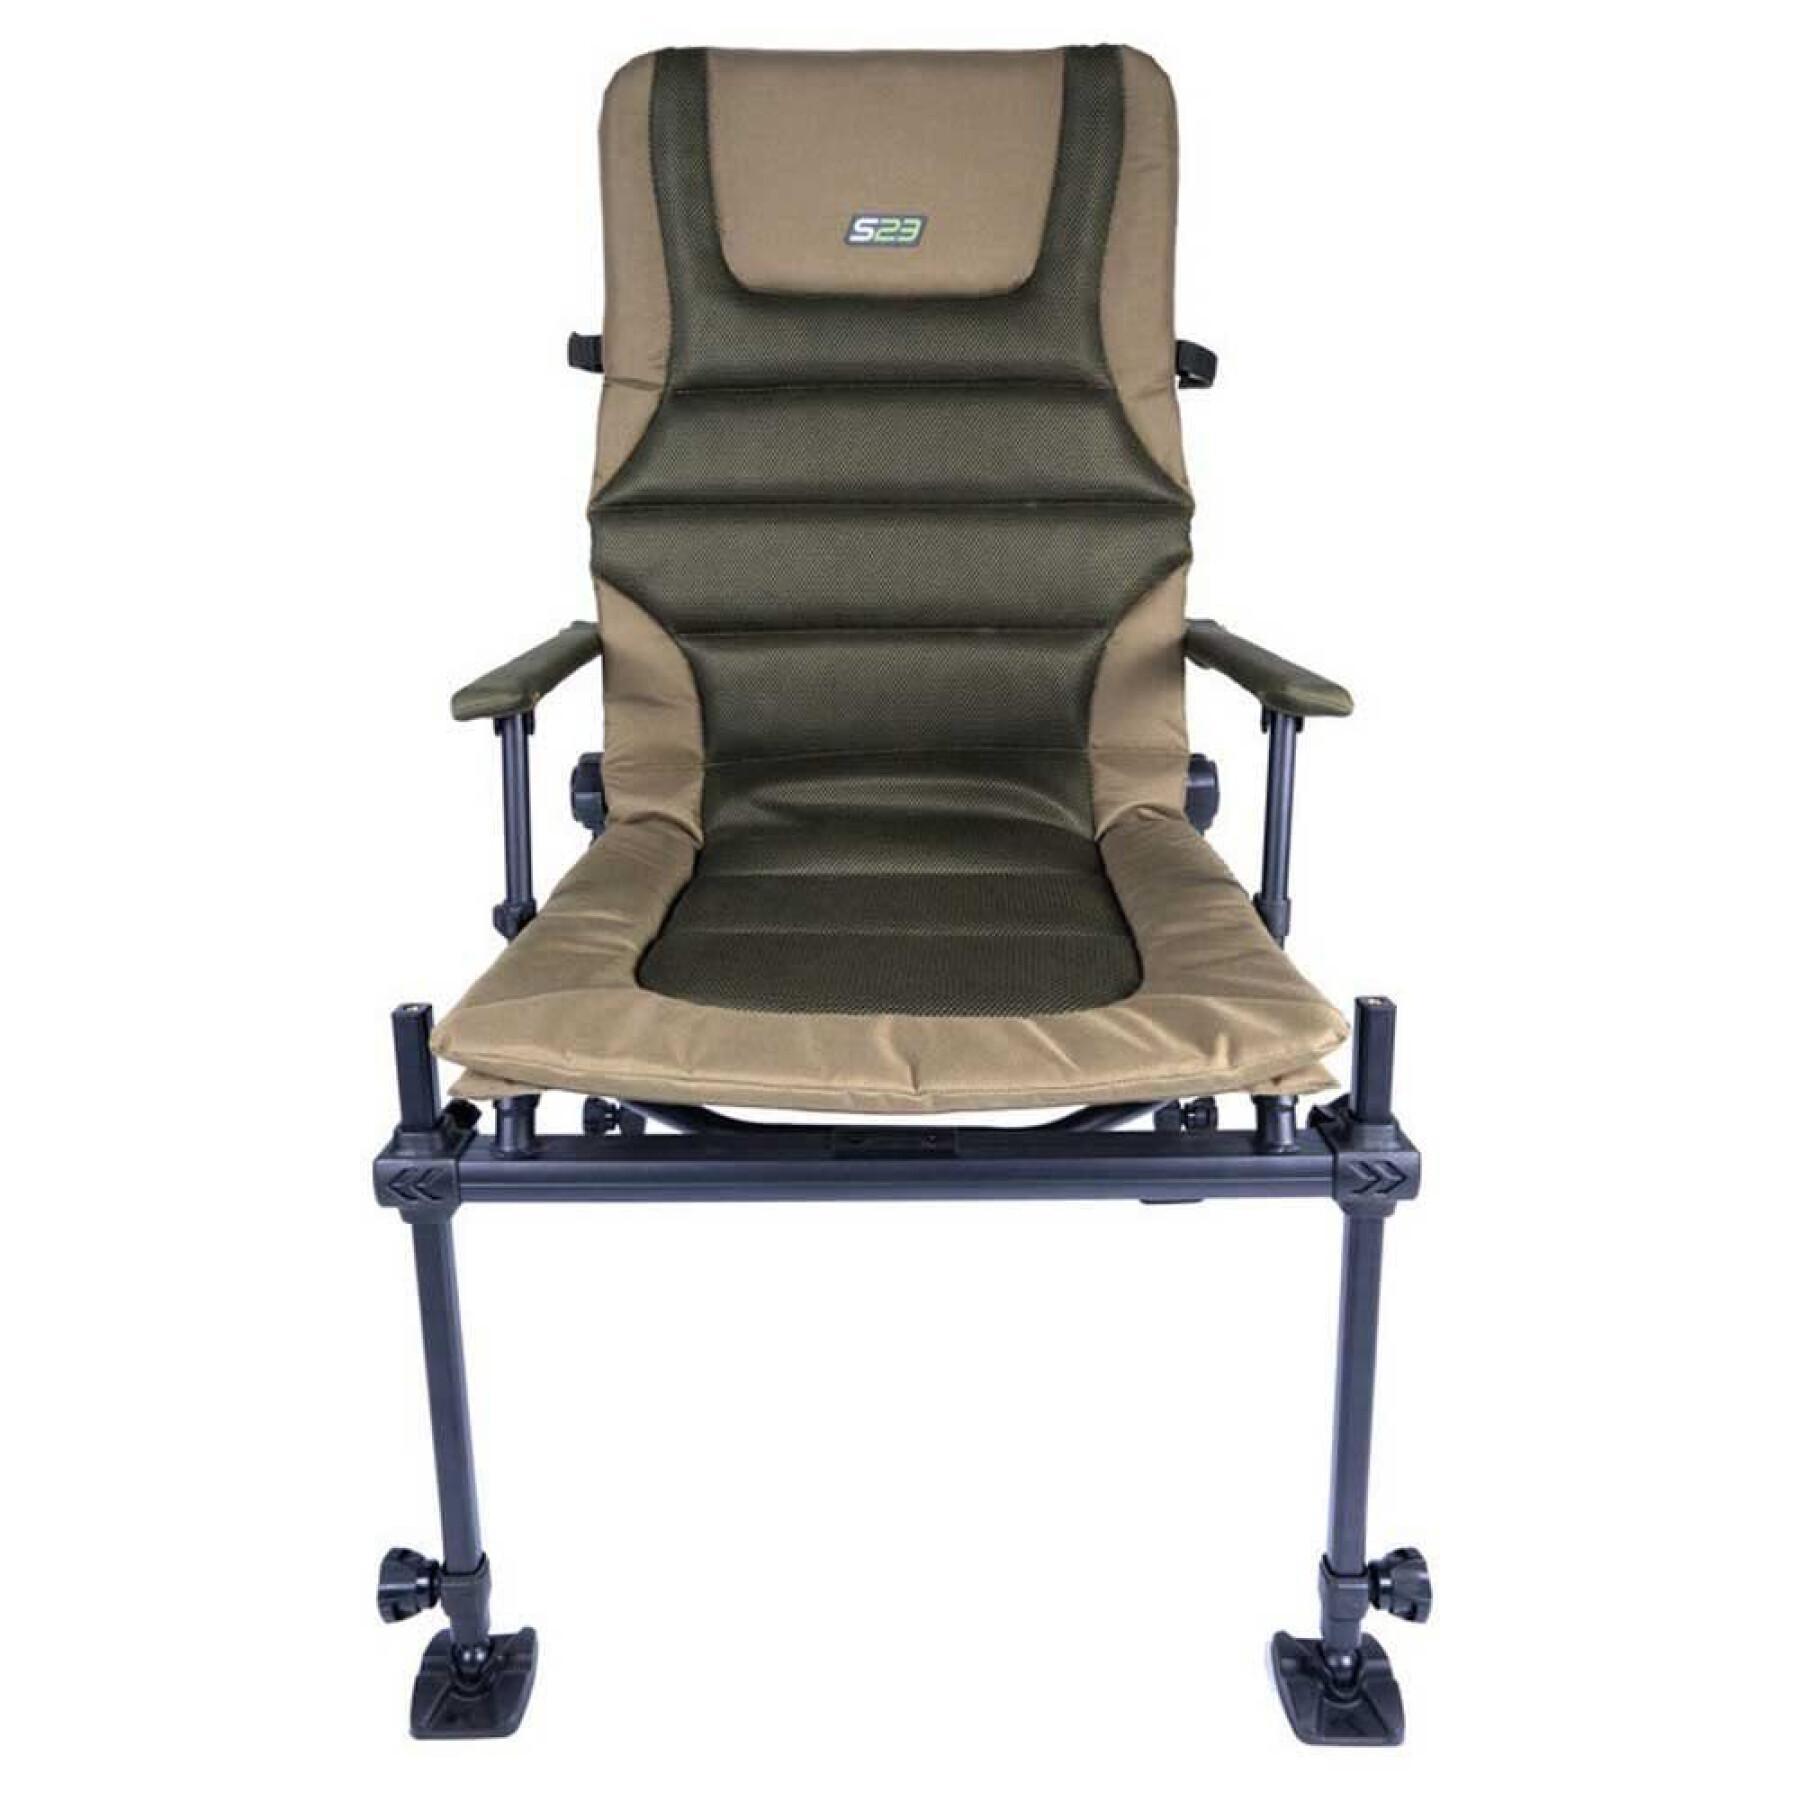 Standard accessory chairs Korum S23